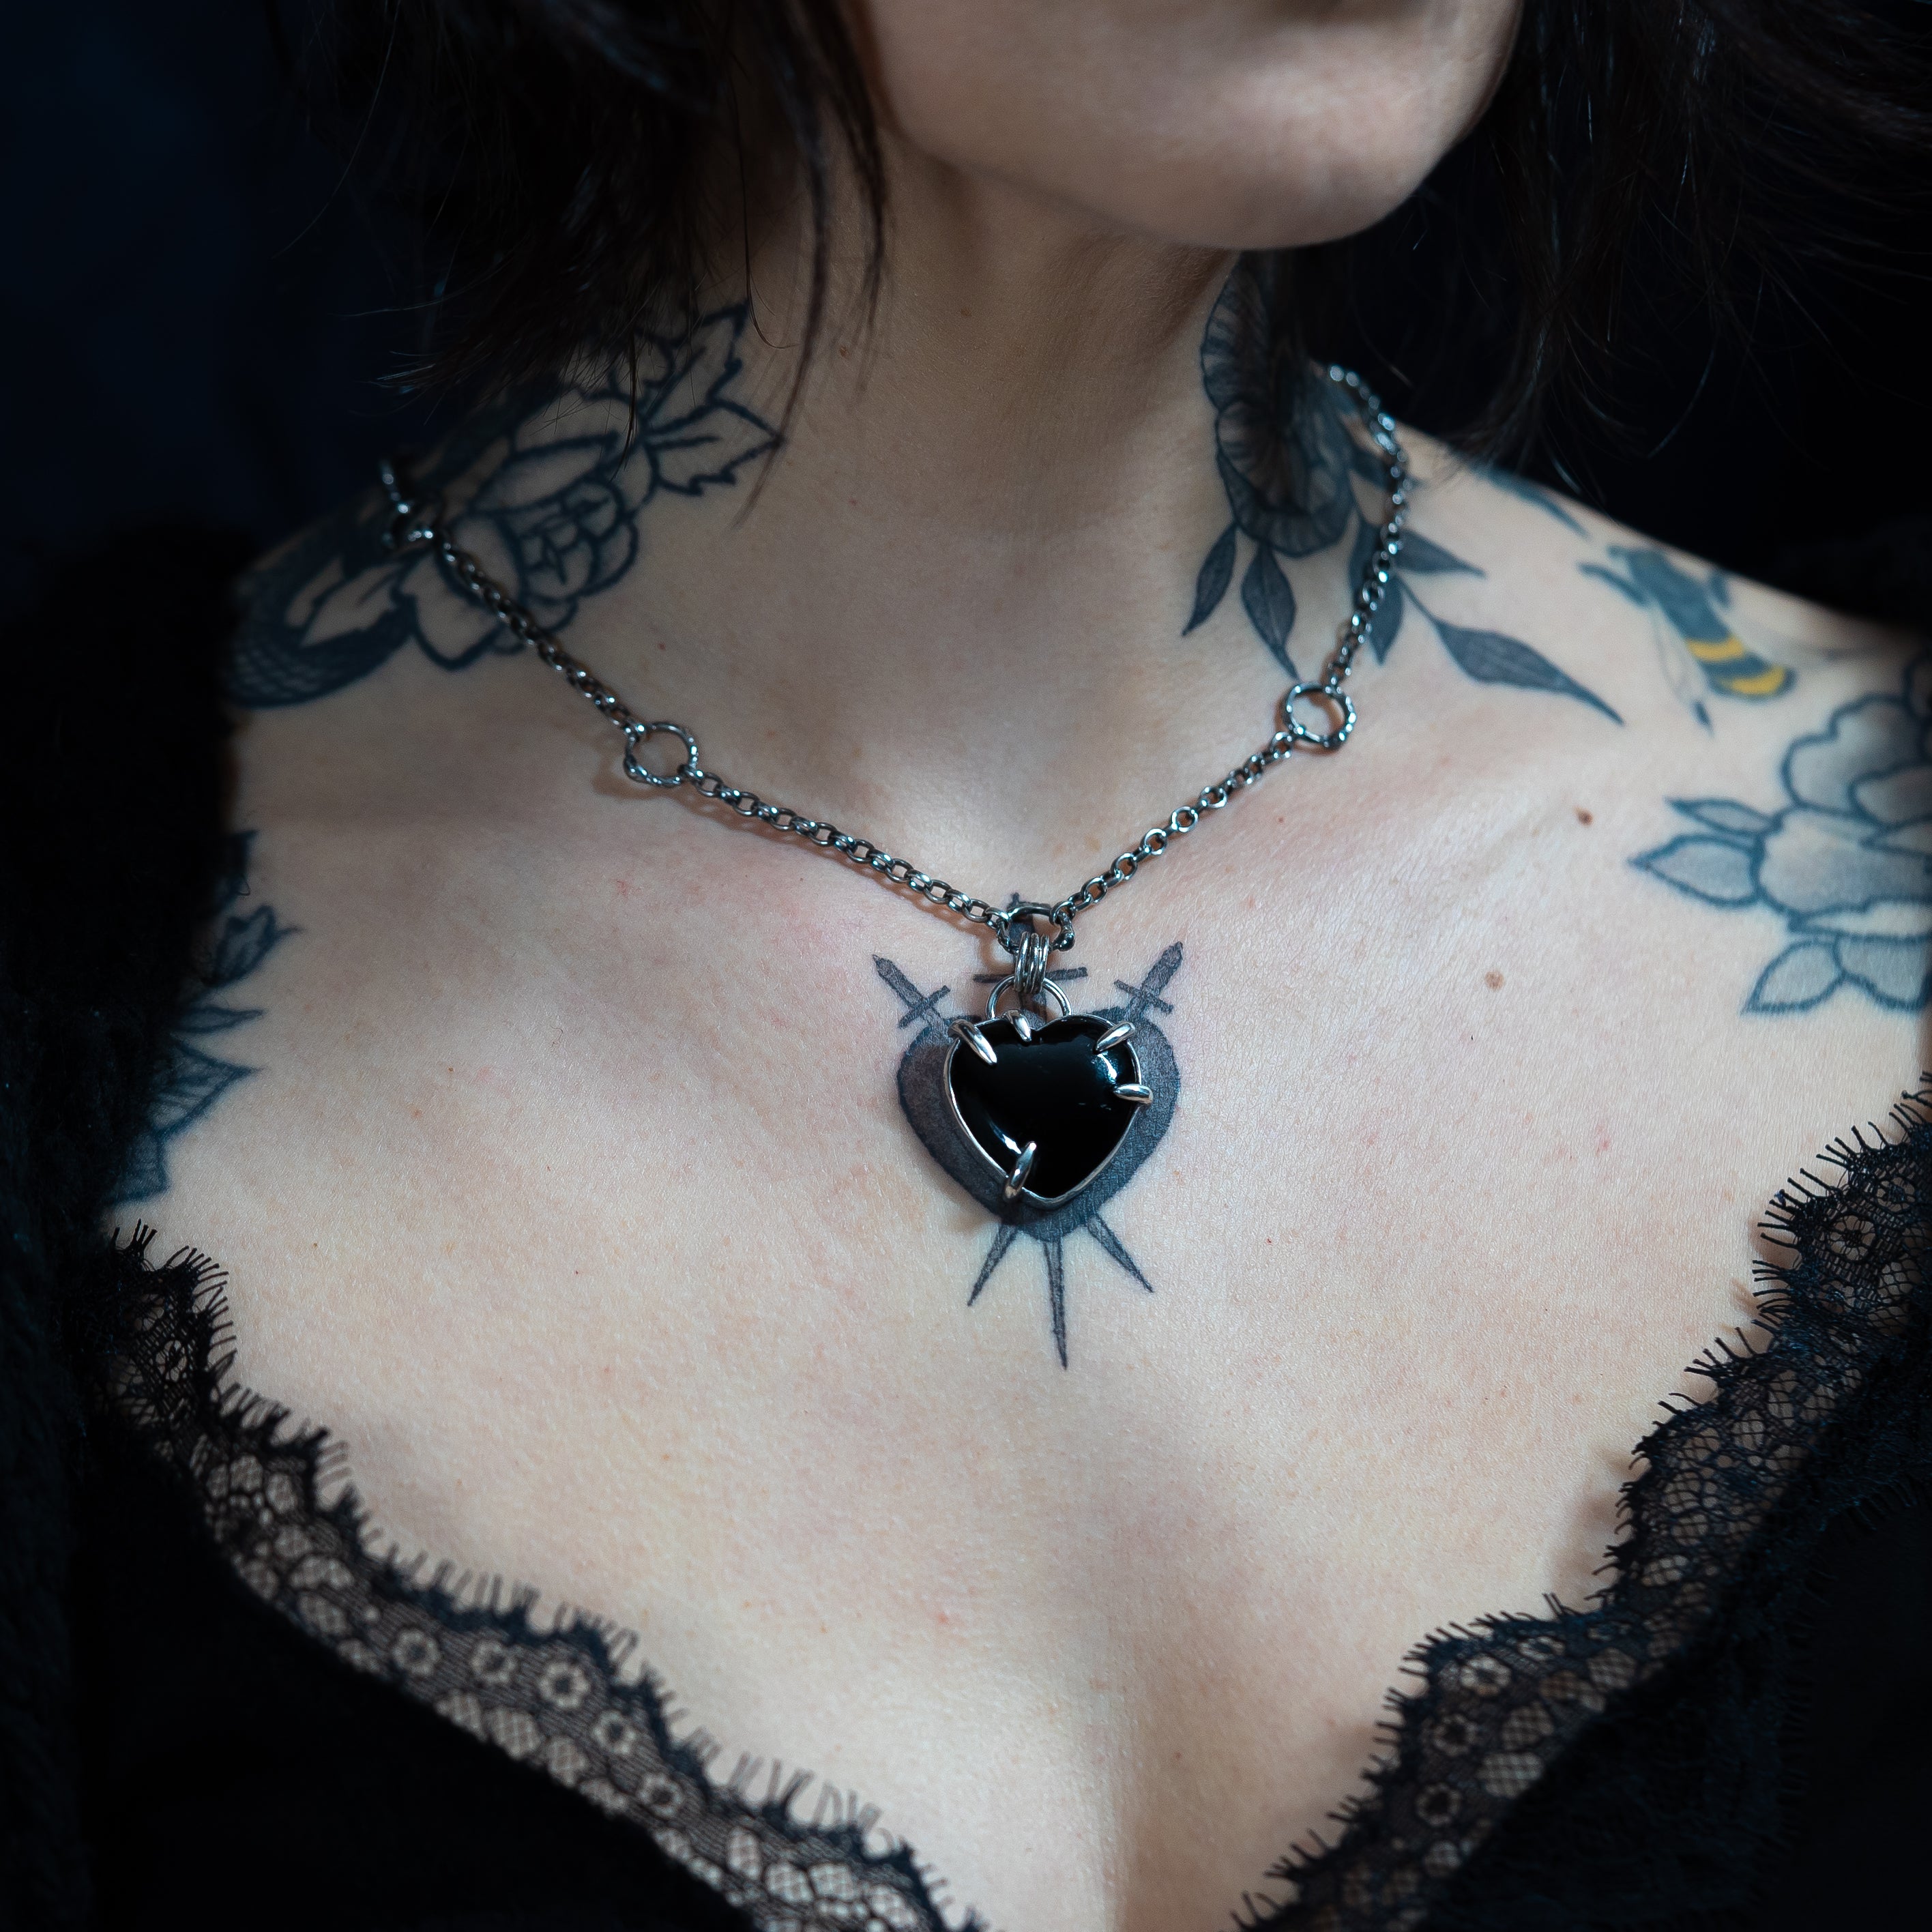 Black Onyx Heart Pendant